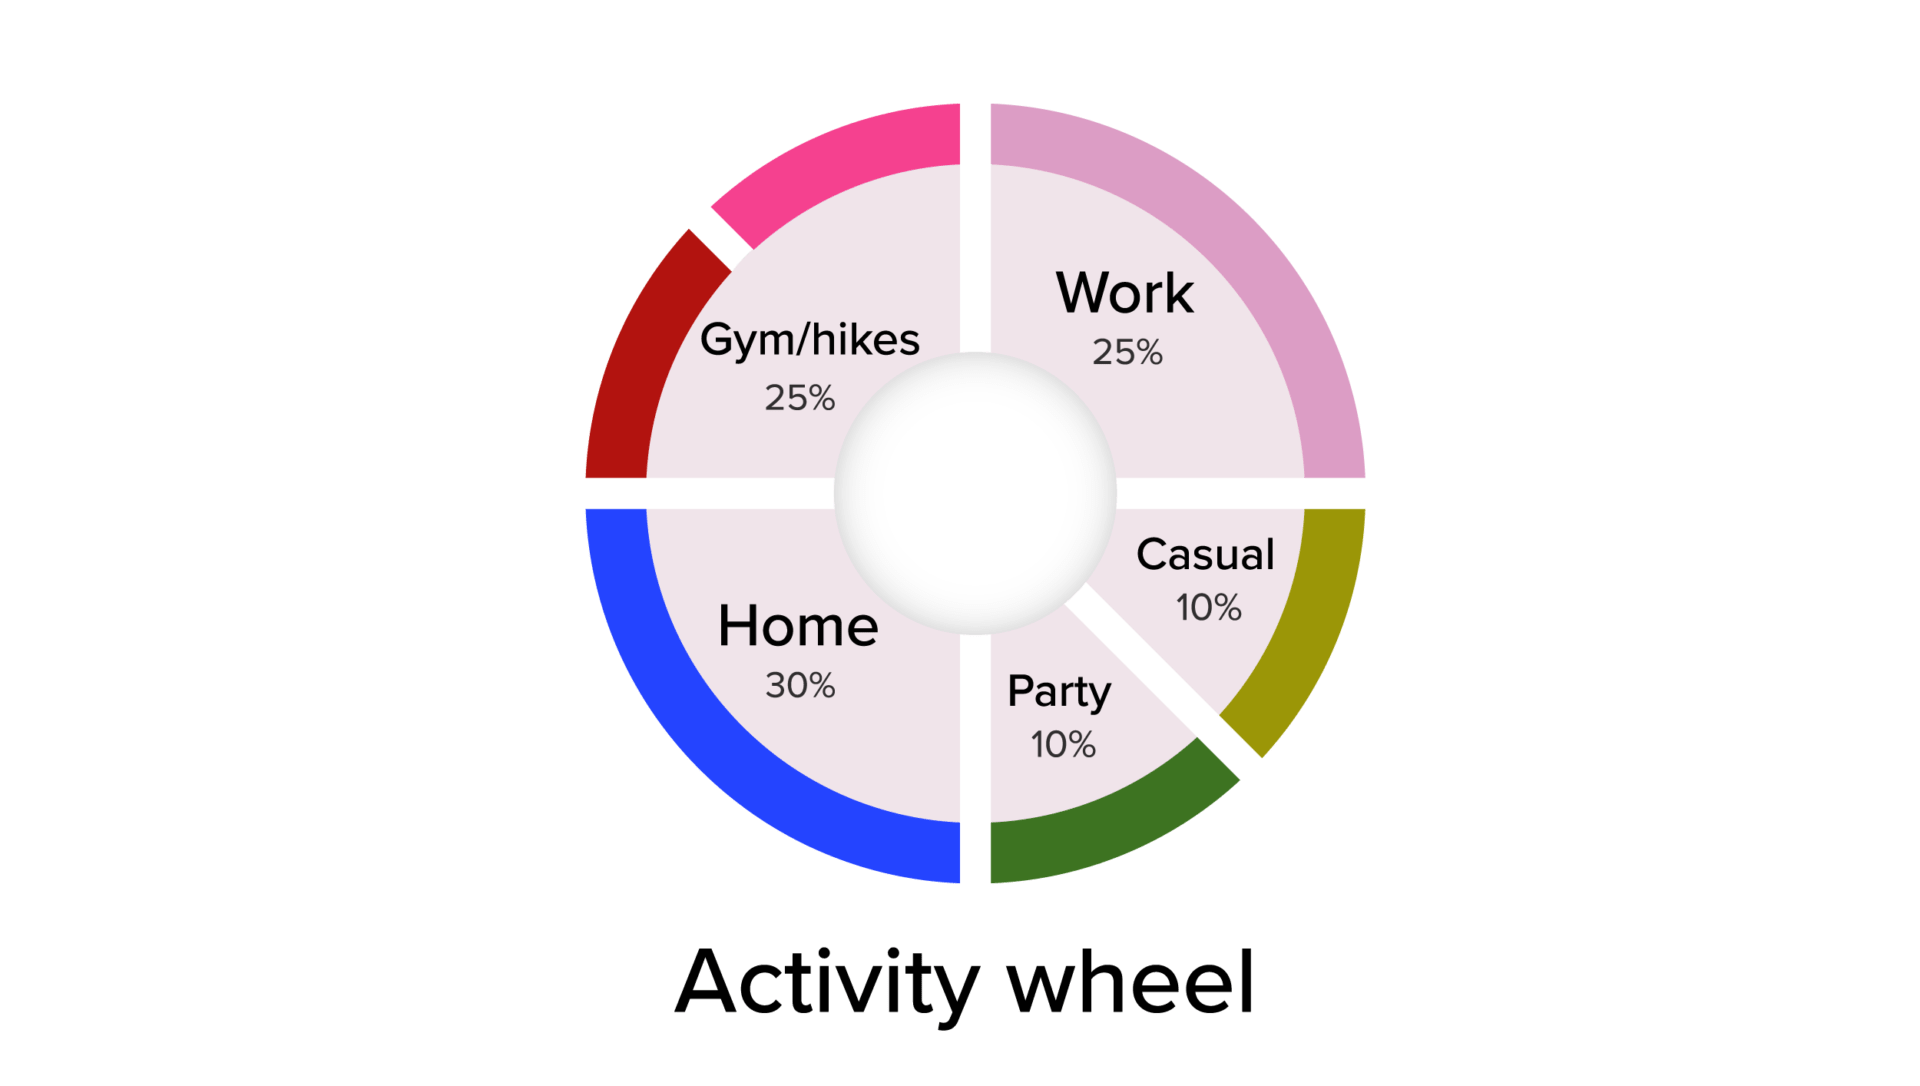 Activity wheel for a capsule wardrobe